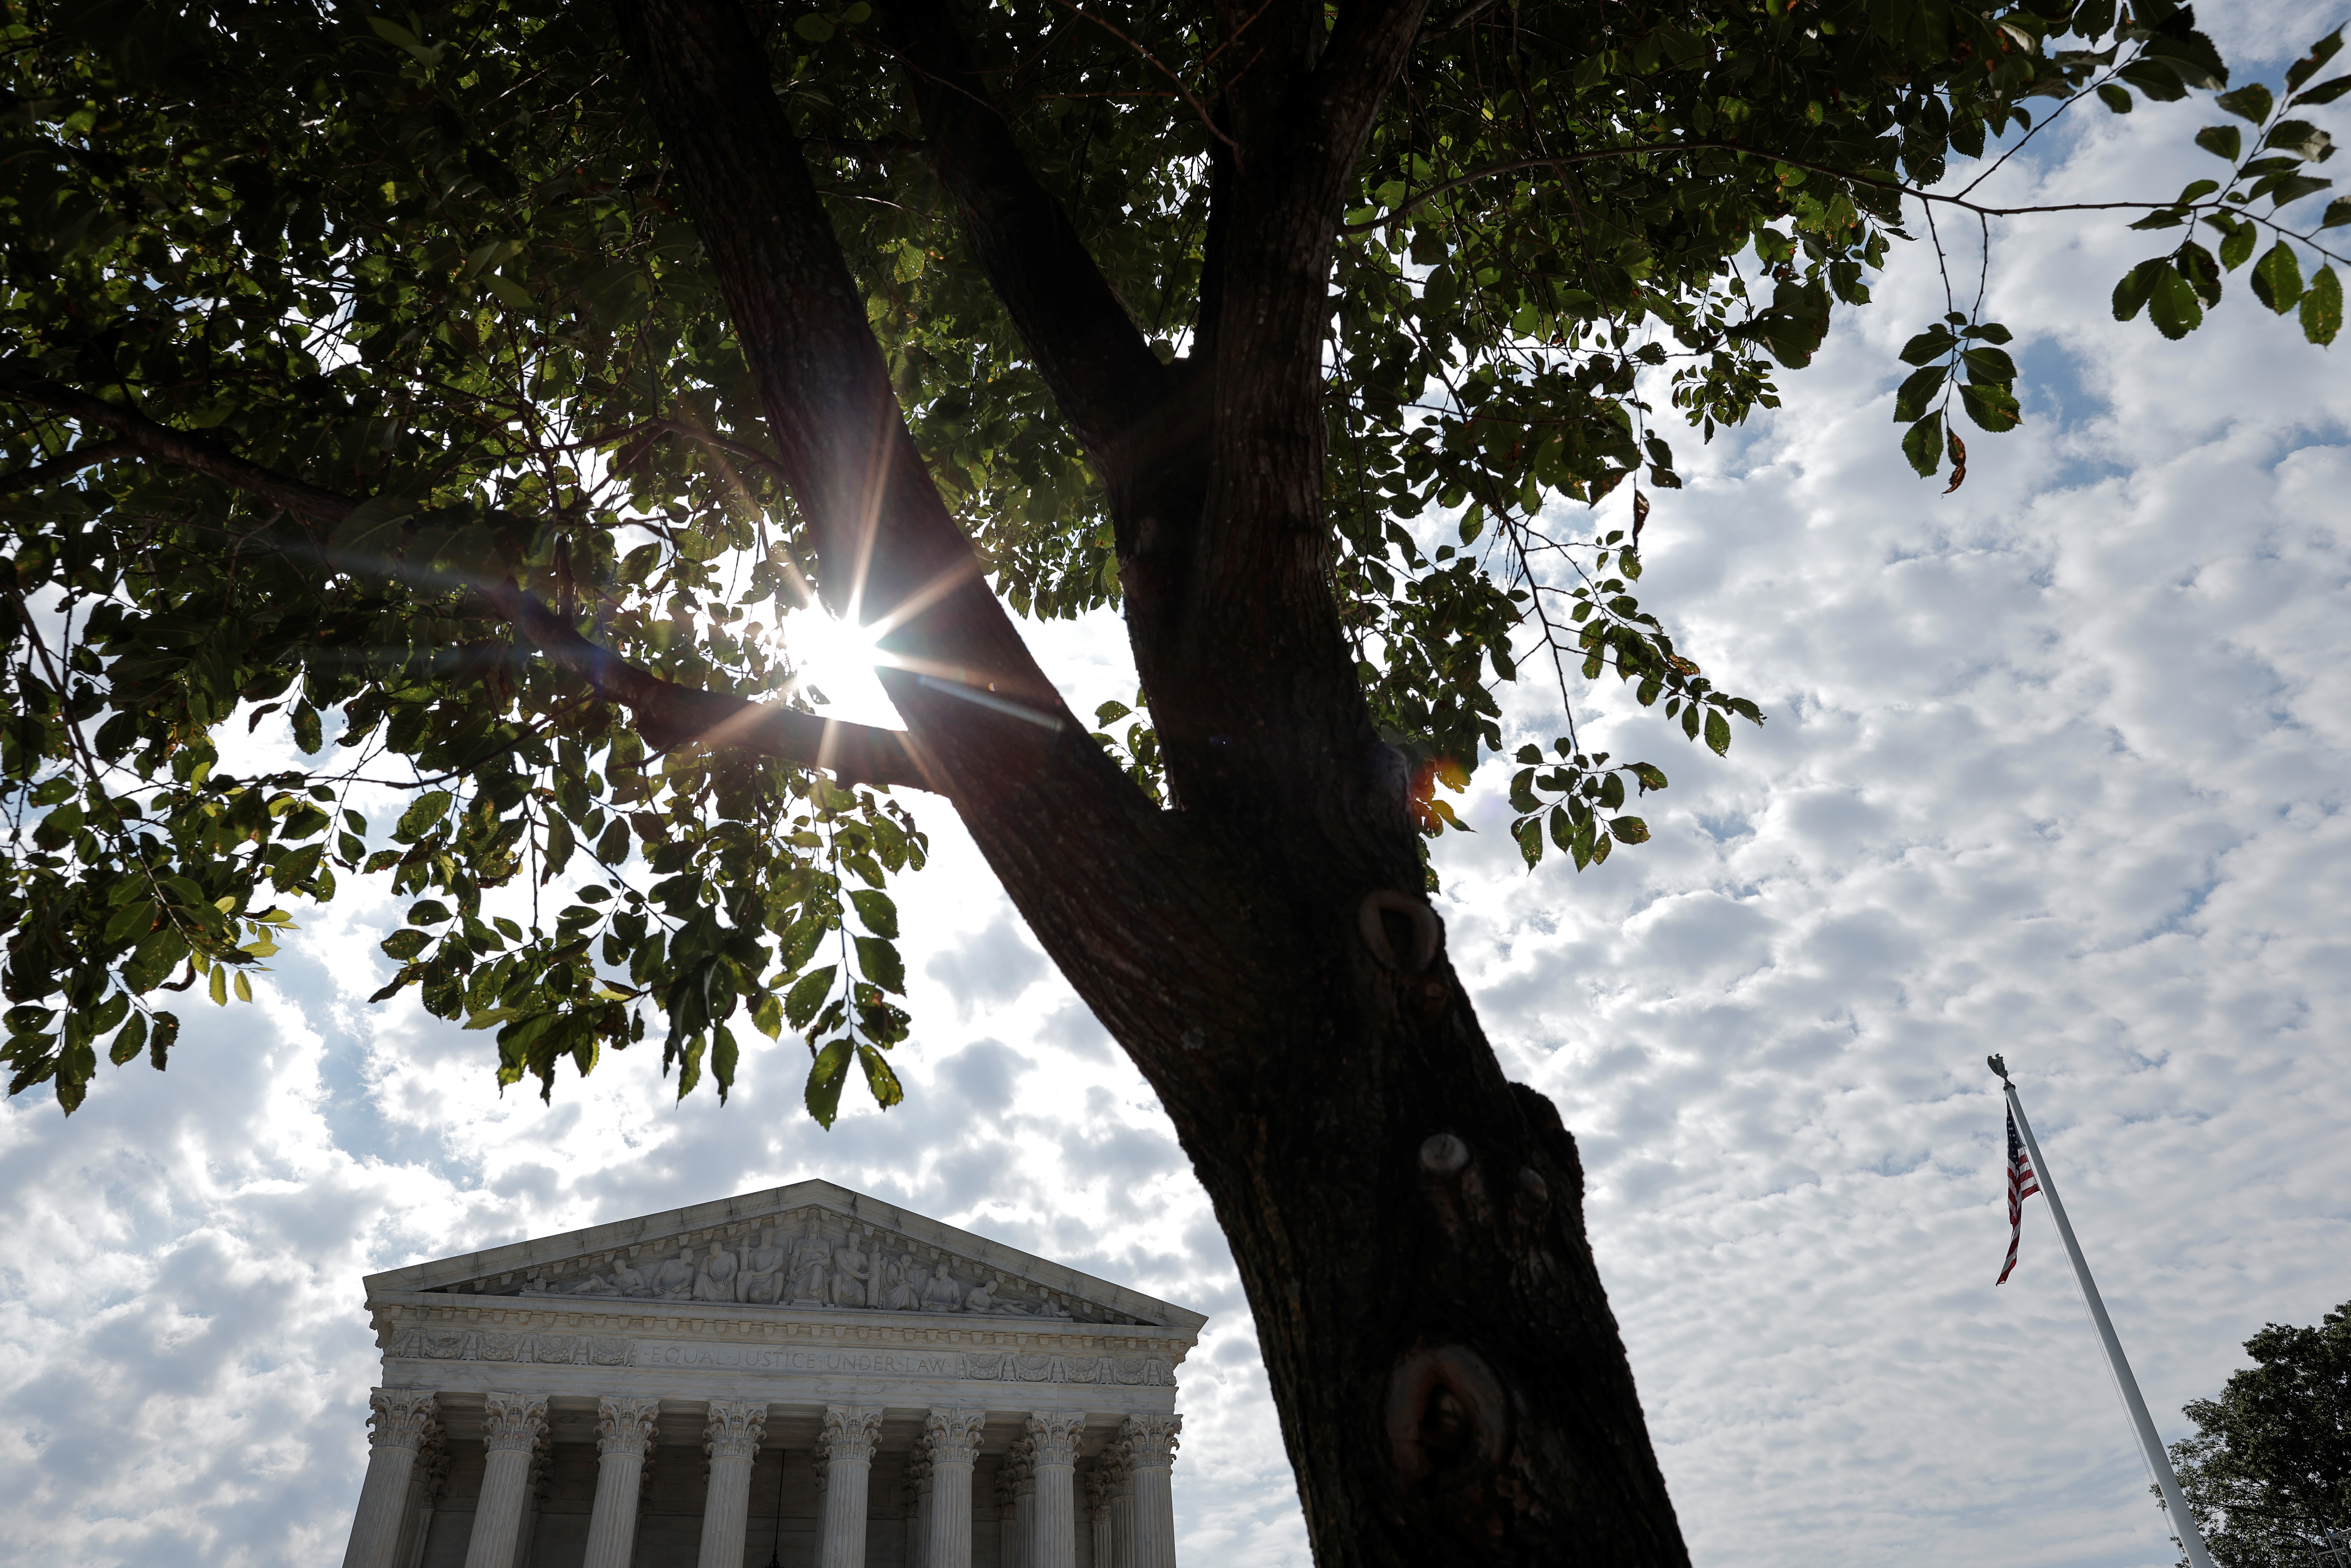 The U.S. Supreme Court is seen in Washington